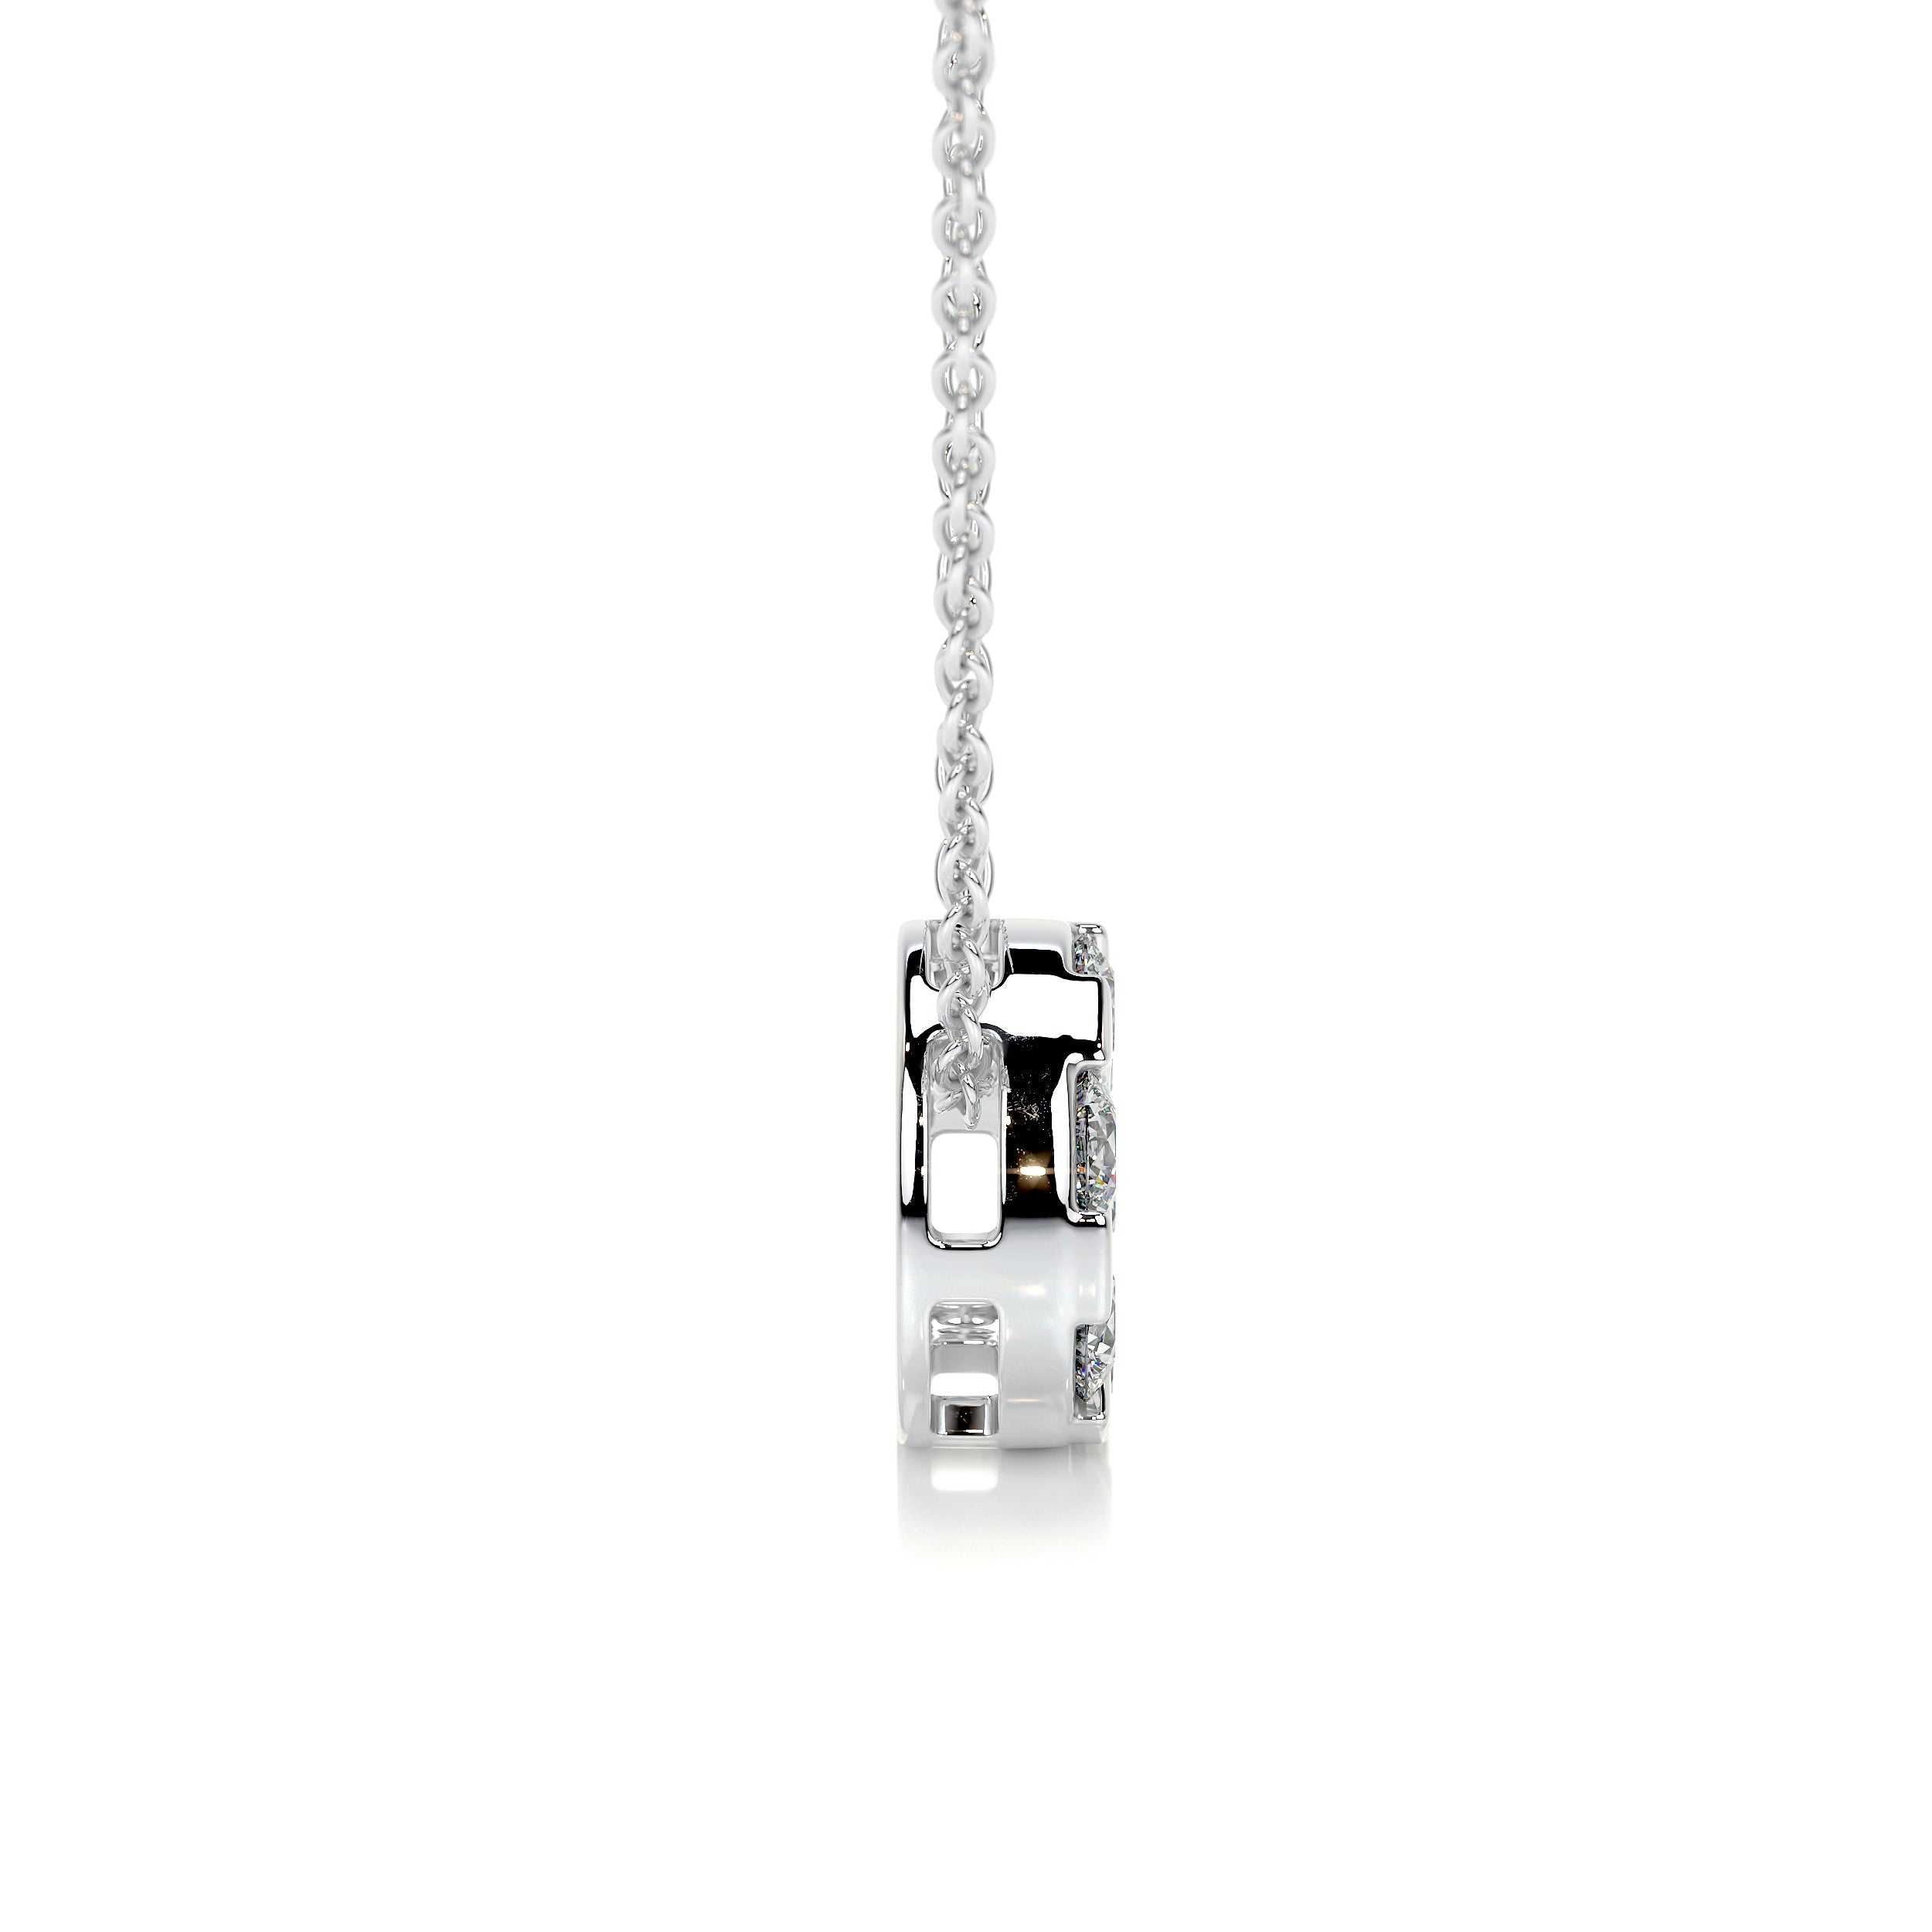 Josie Diamond Pendant   (0.50 Carat) -18K White Gold